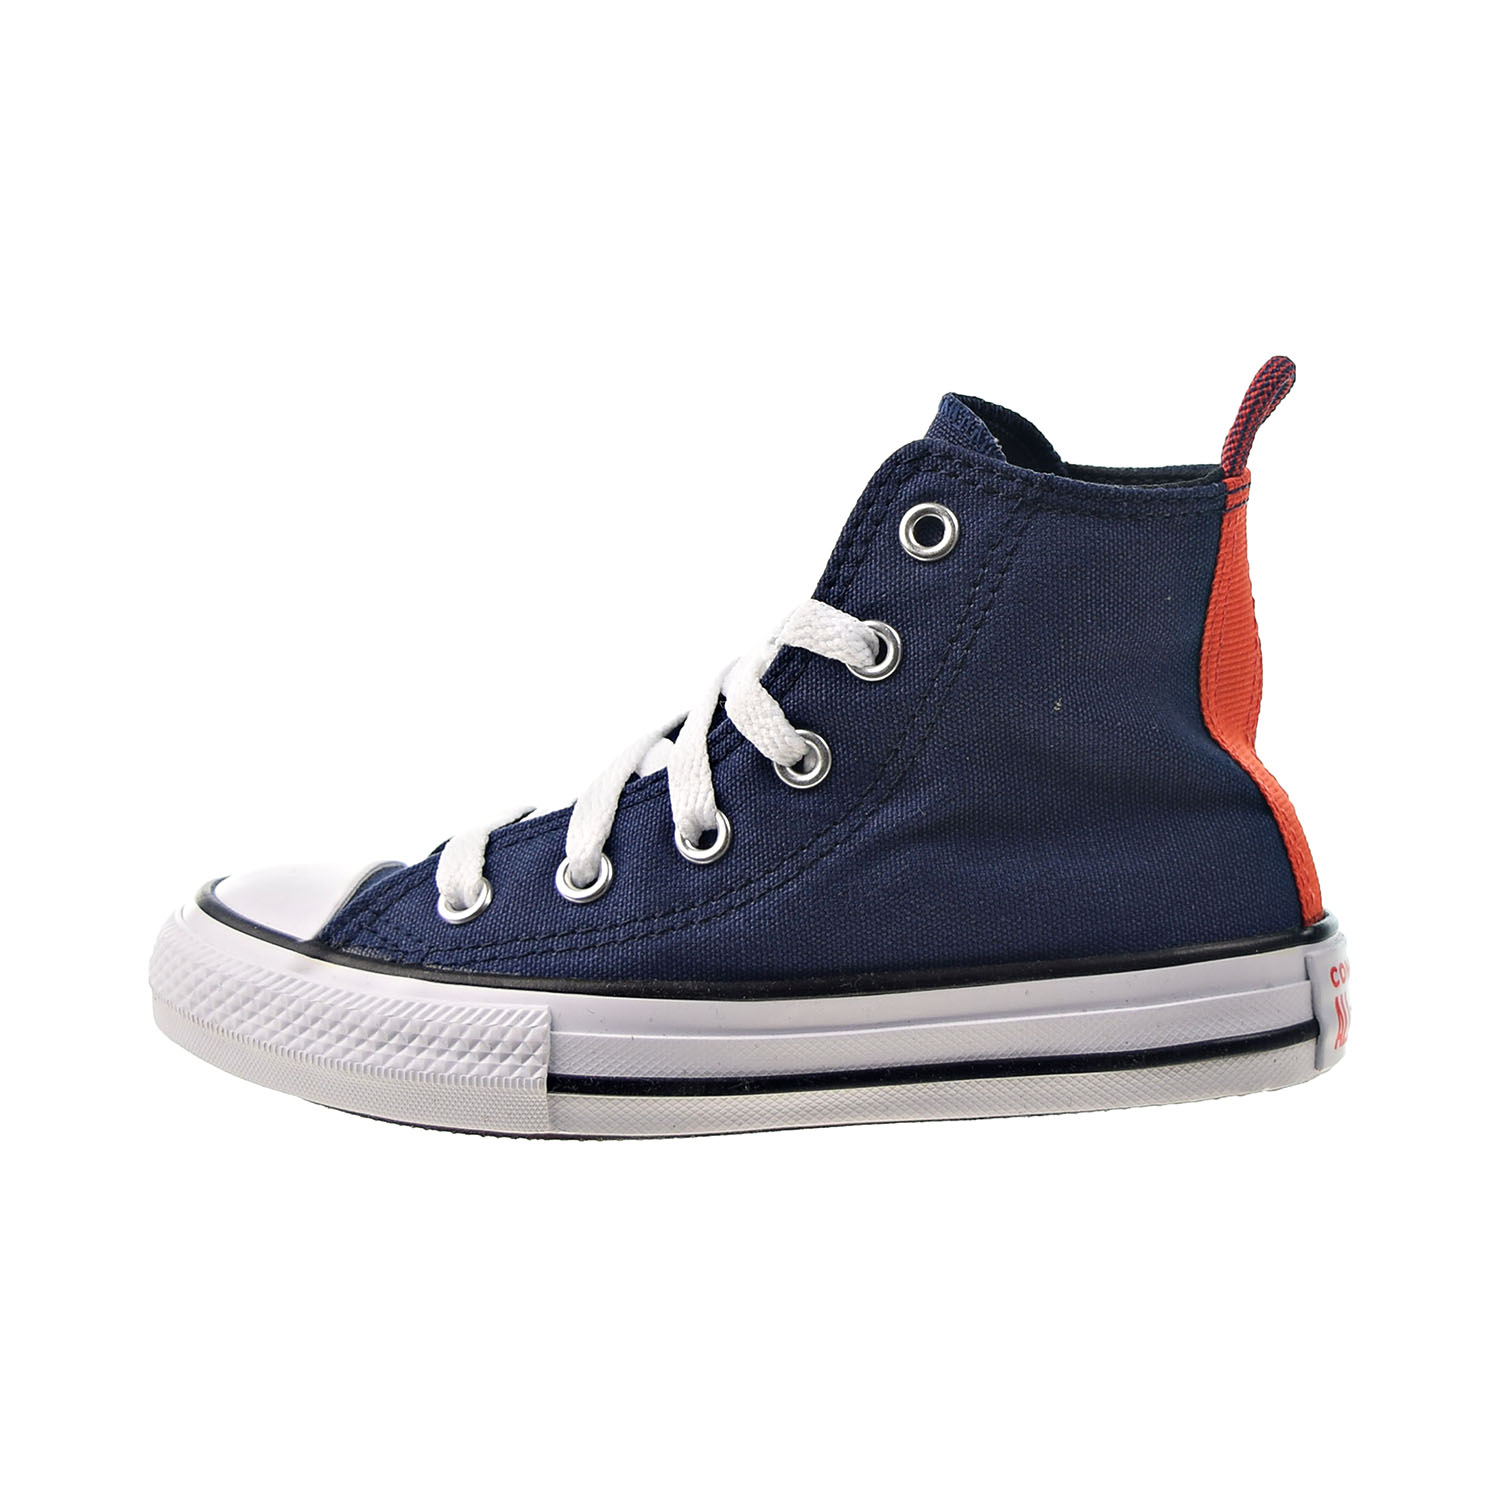 Converse Chuck Taylor All Star Hi Kids' Shoes Midnight Navy-Bright Orange 670671f - image 4 of 6